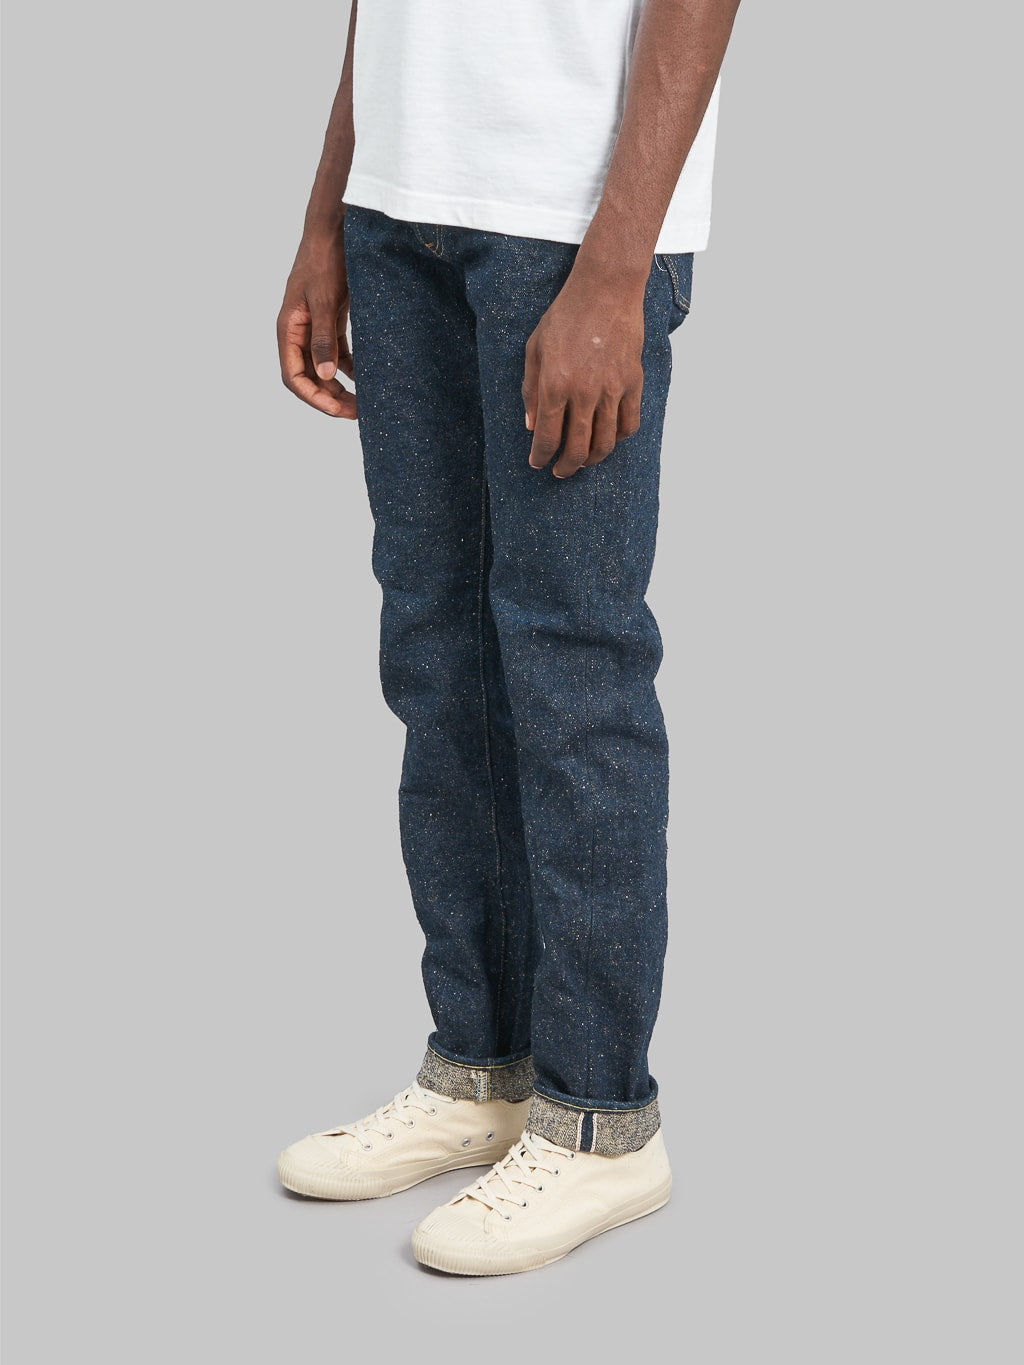 ONI Denim 246SESR "Secret Super Rough" 20oz Neat Straight Jeans